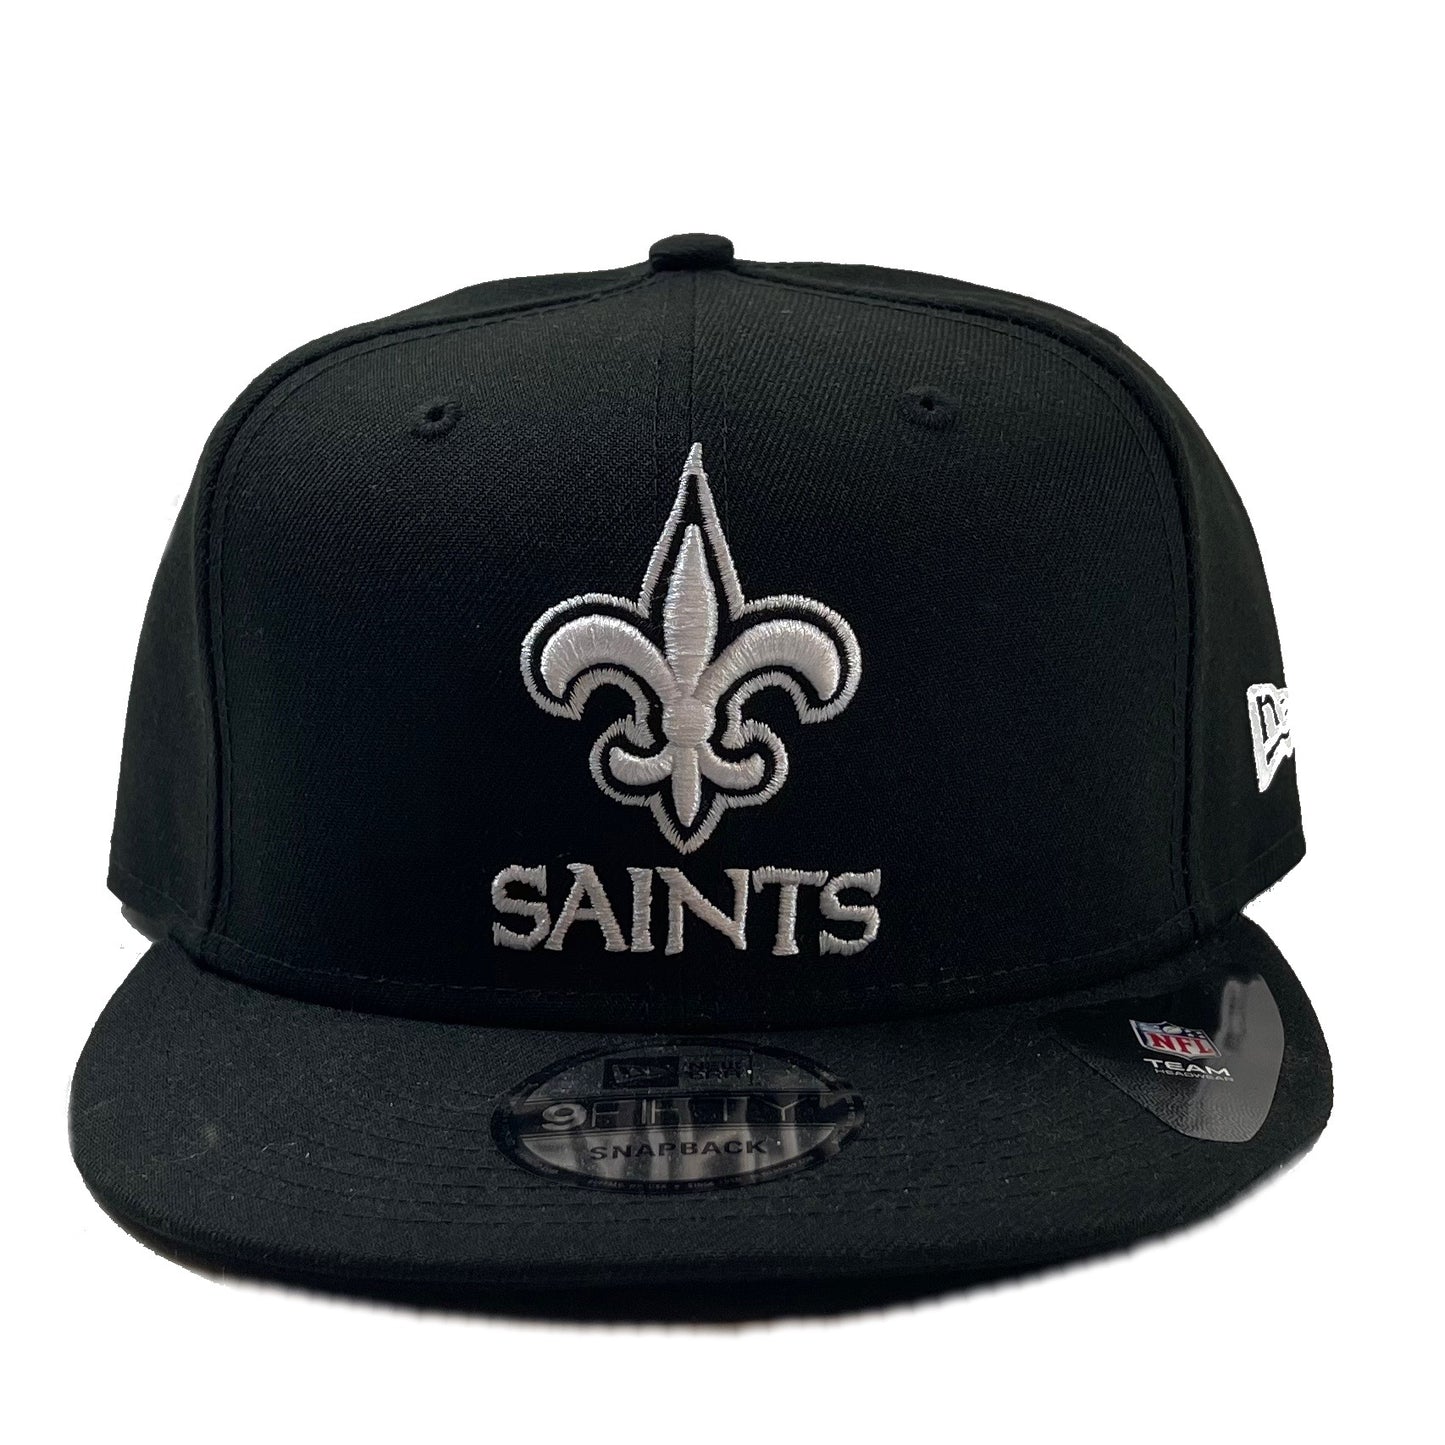 New Orleans Saints (Black) Snapback